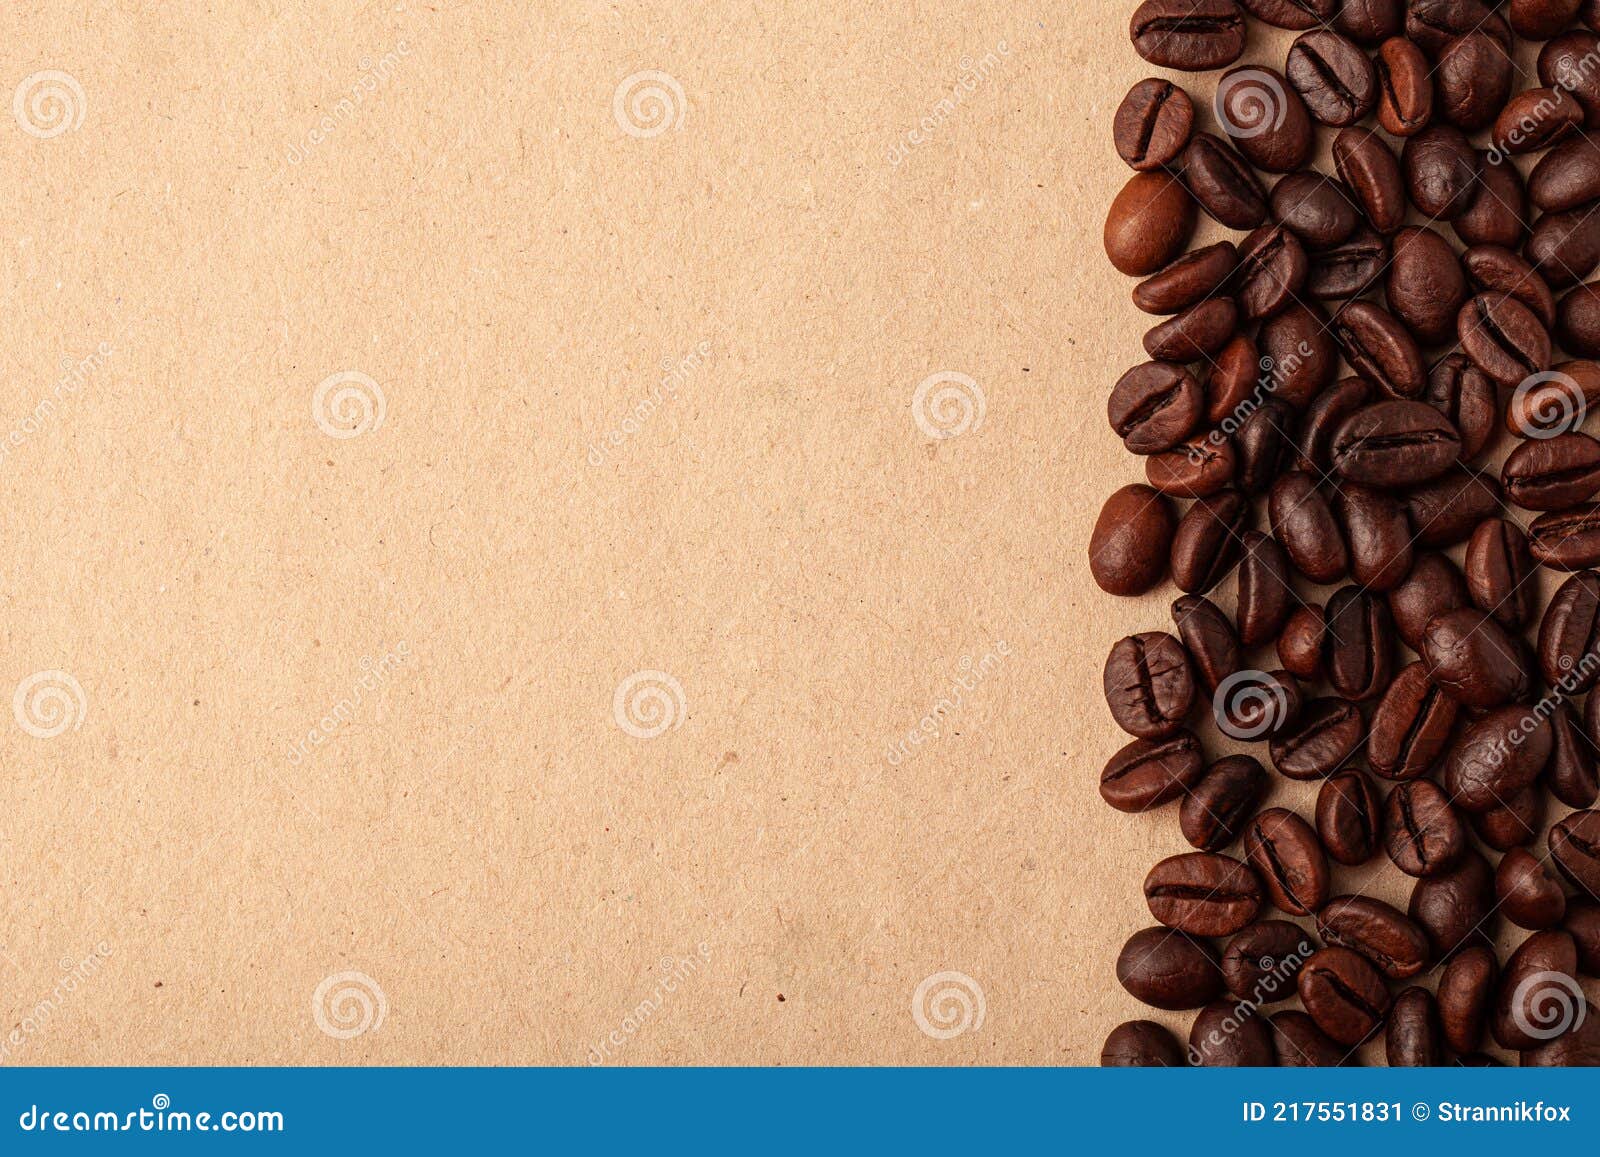 Coffee Bean Wallpaper by Derek Northrop